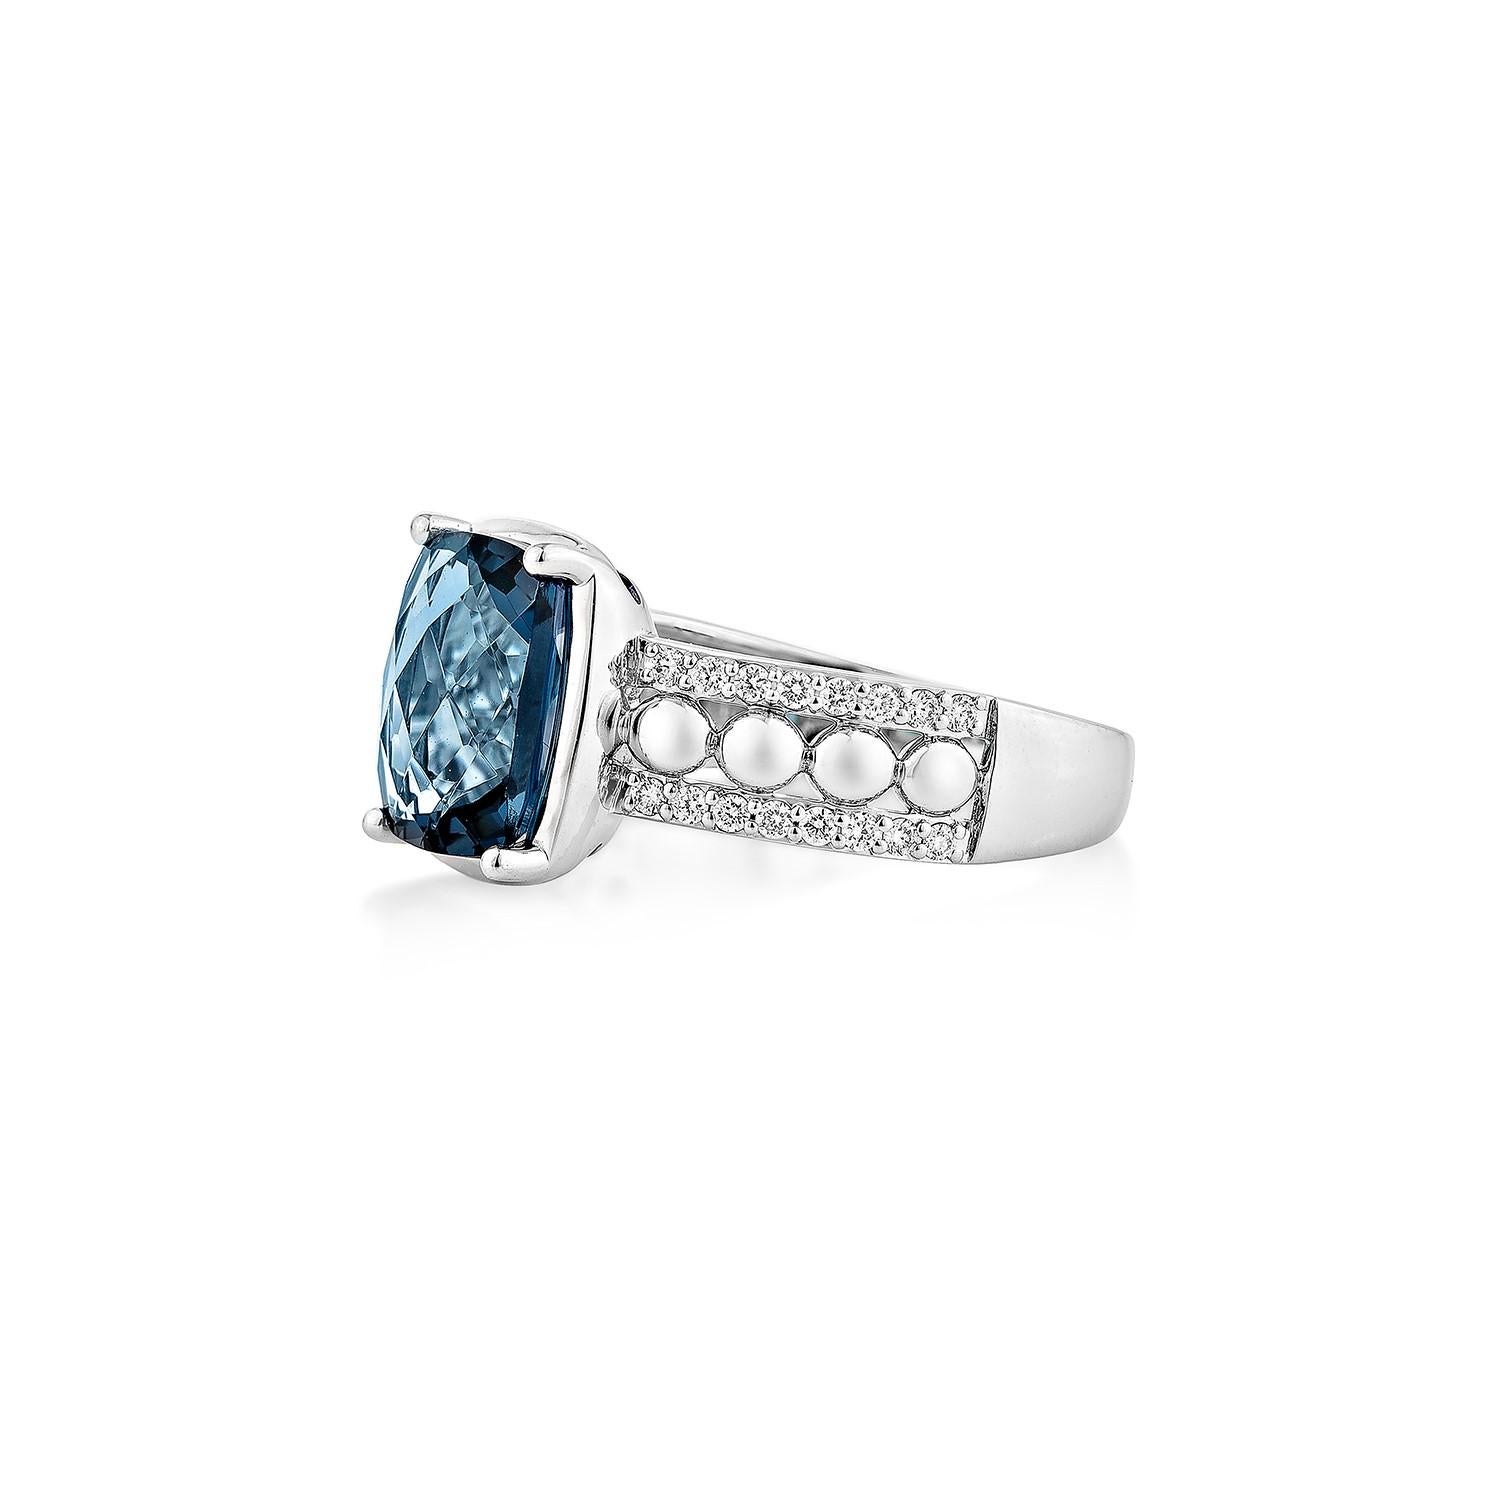 Cushion Cut 3.94 Carat London Blue Topaz Fancy Ring in 18Karat White Gold with Diamond. For Sale